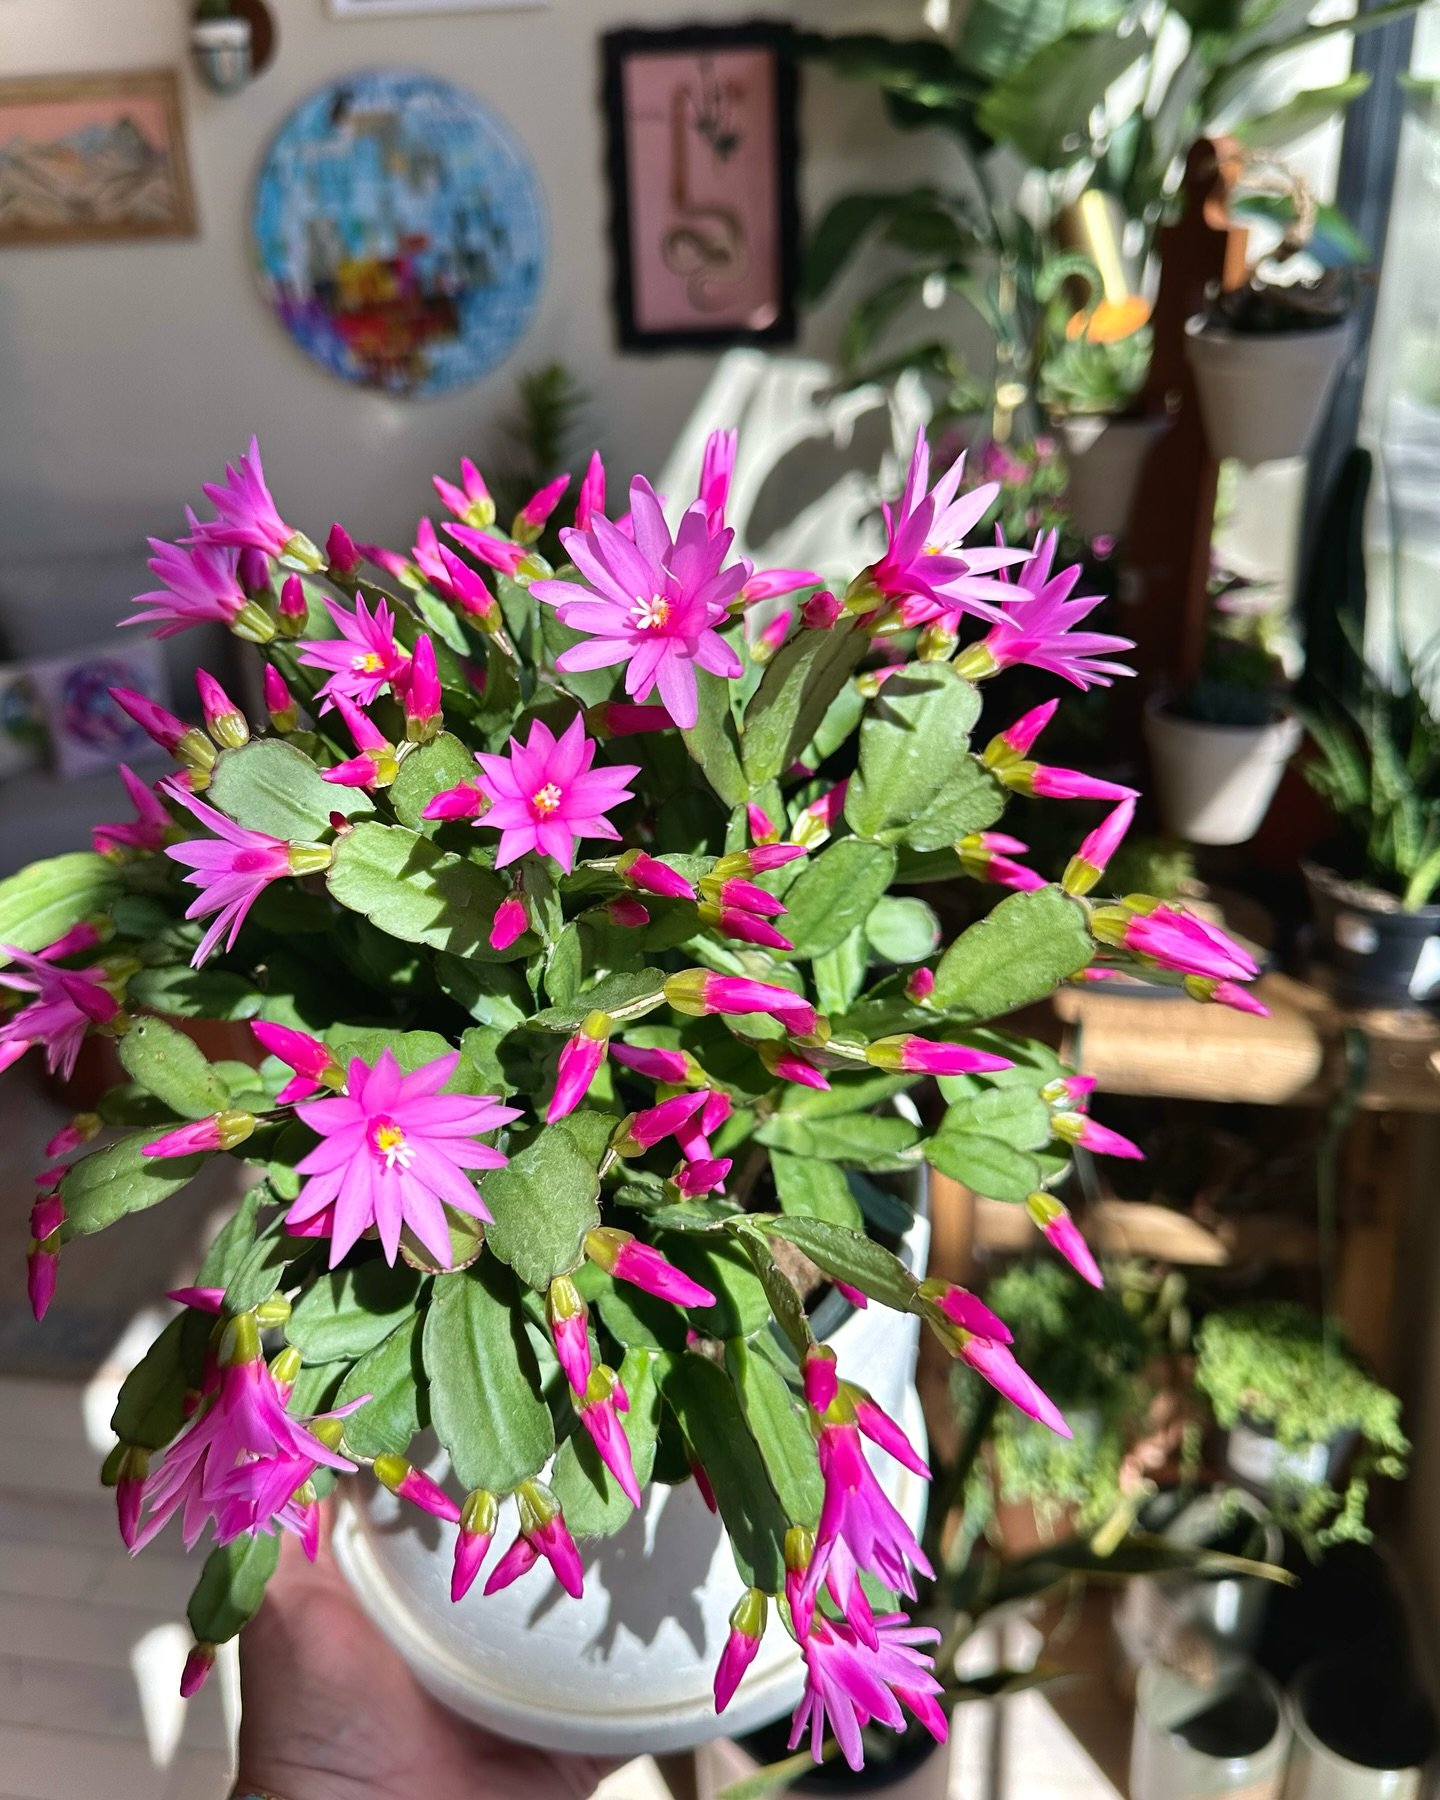 spring cactus magic ✨

#plantsandothergoods